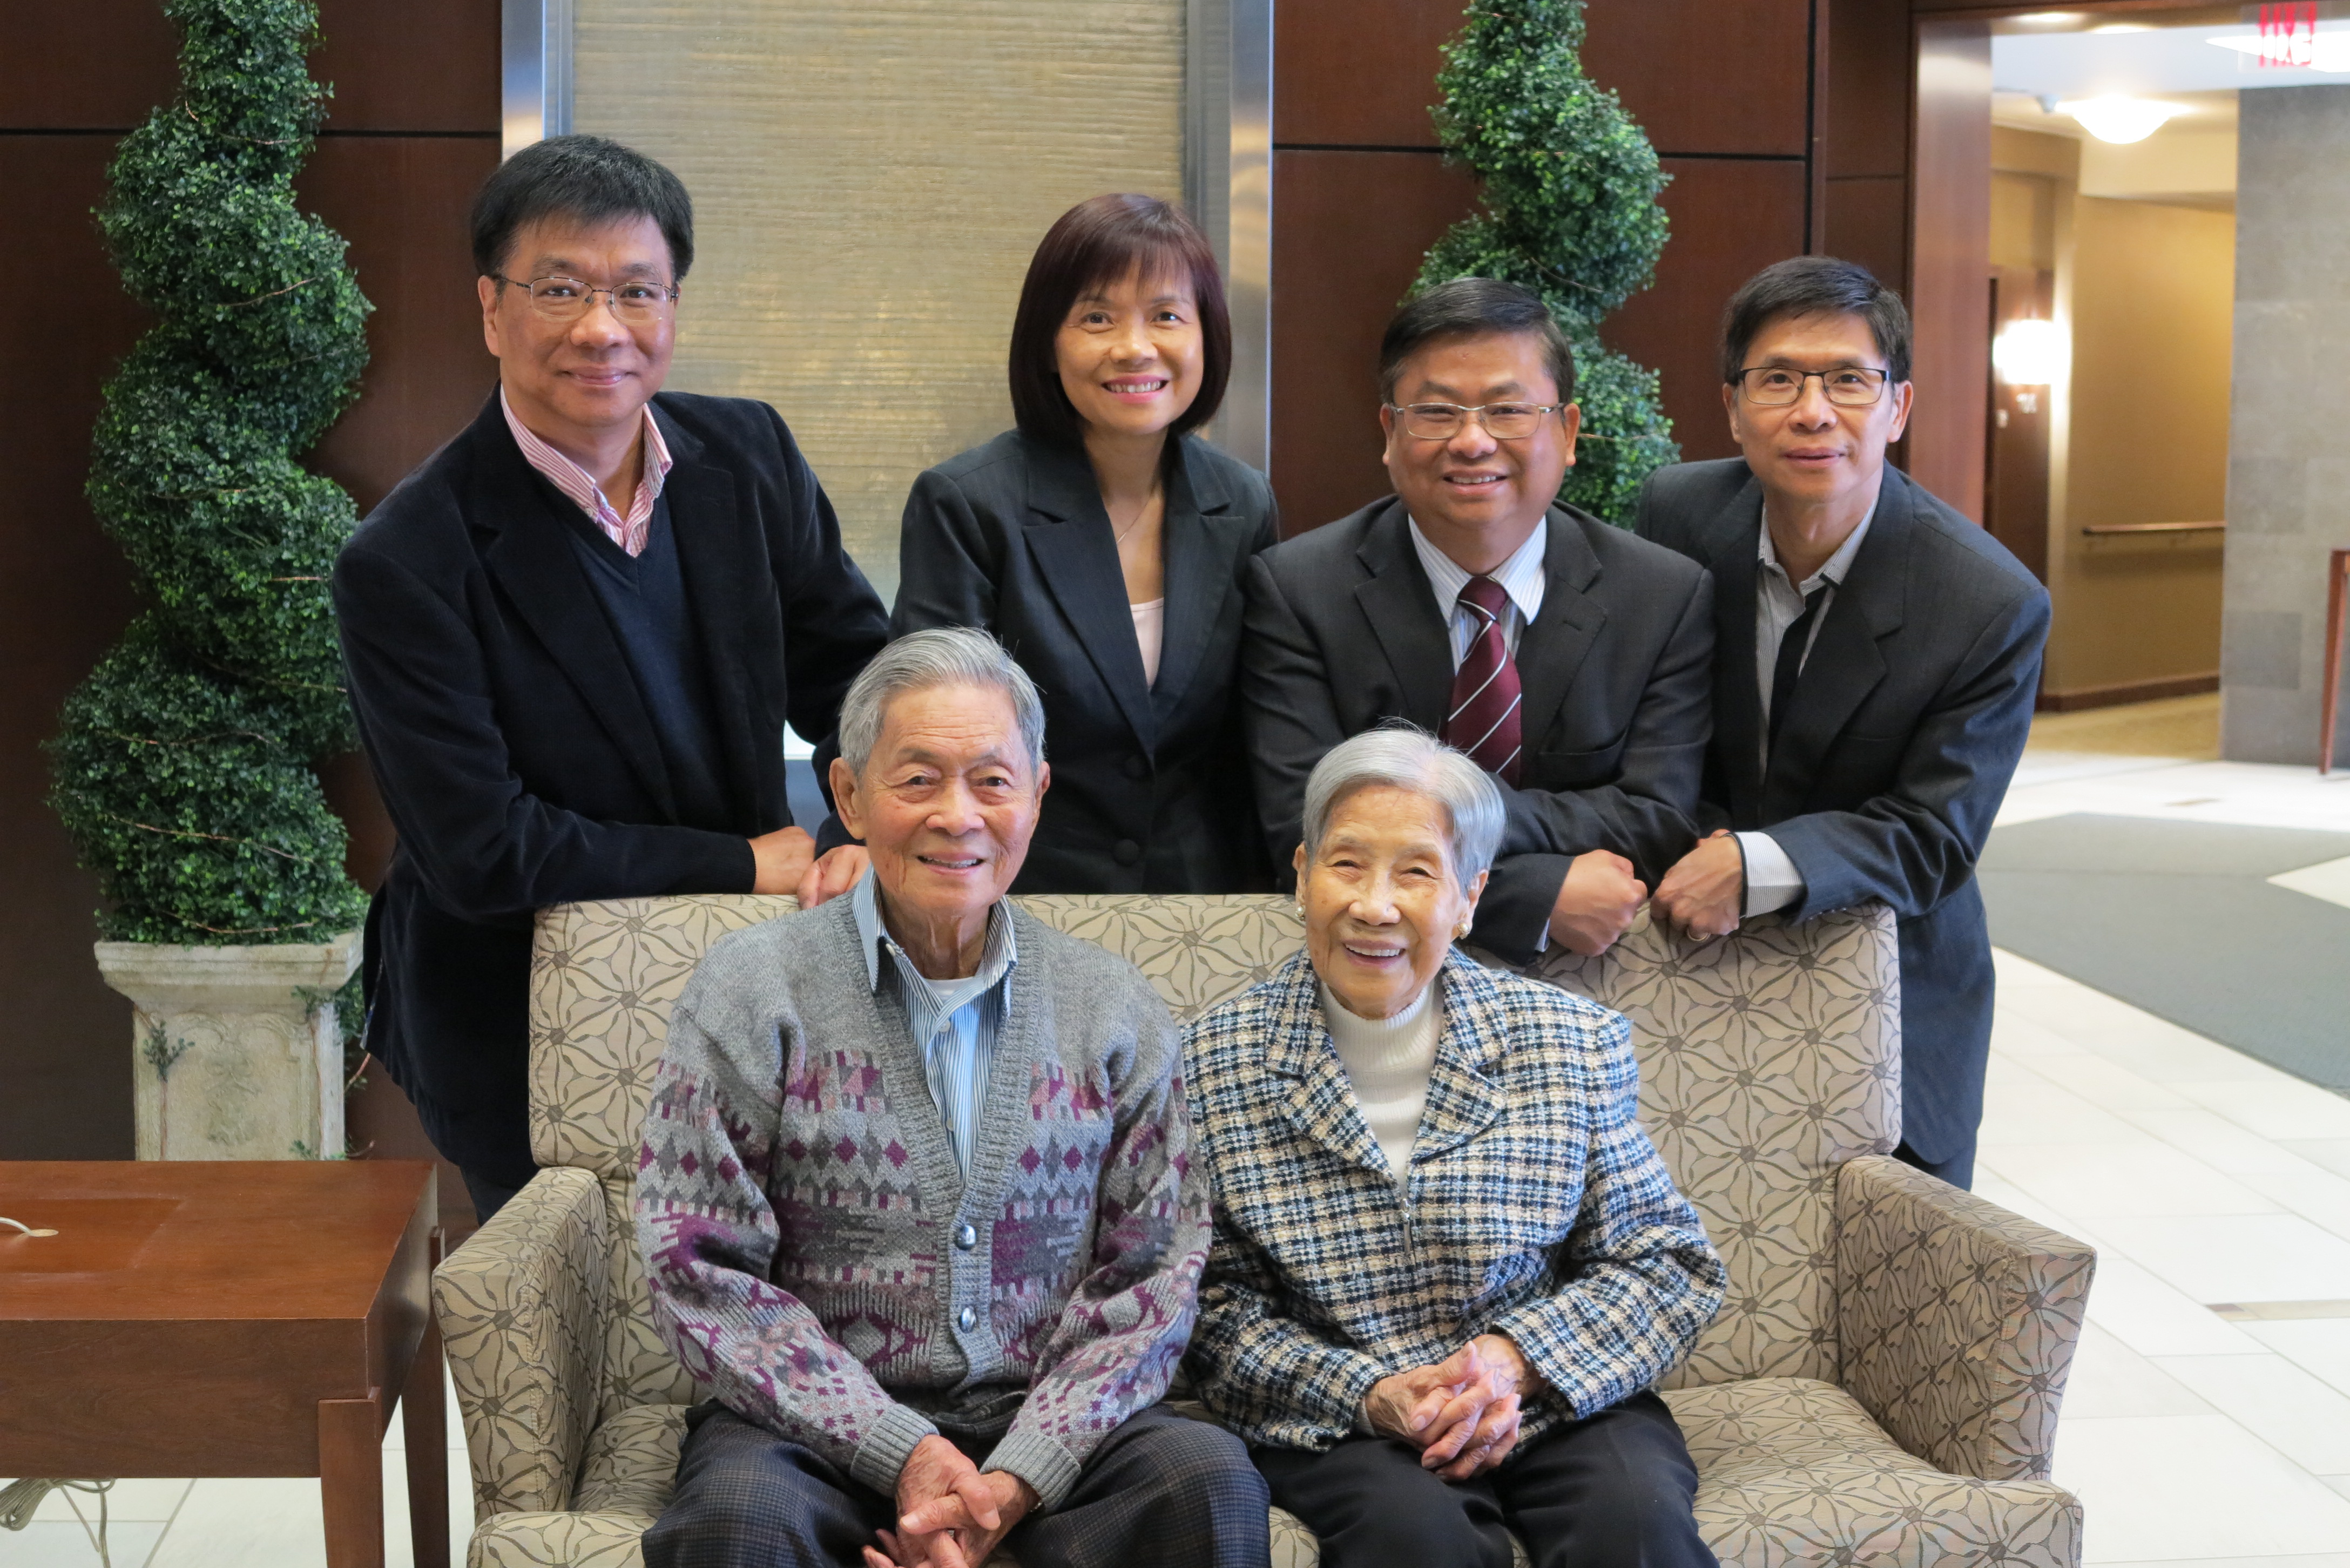 Family reunion, 2016 (Photo: Rev. Francis C. Choi)